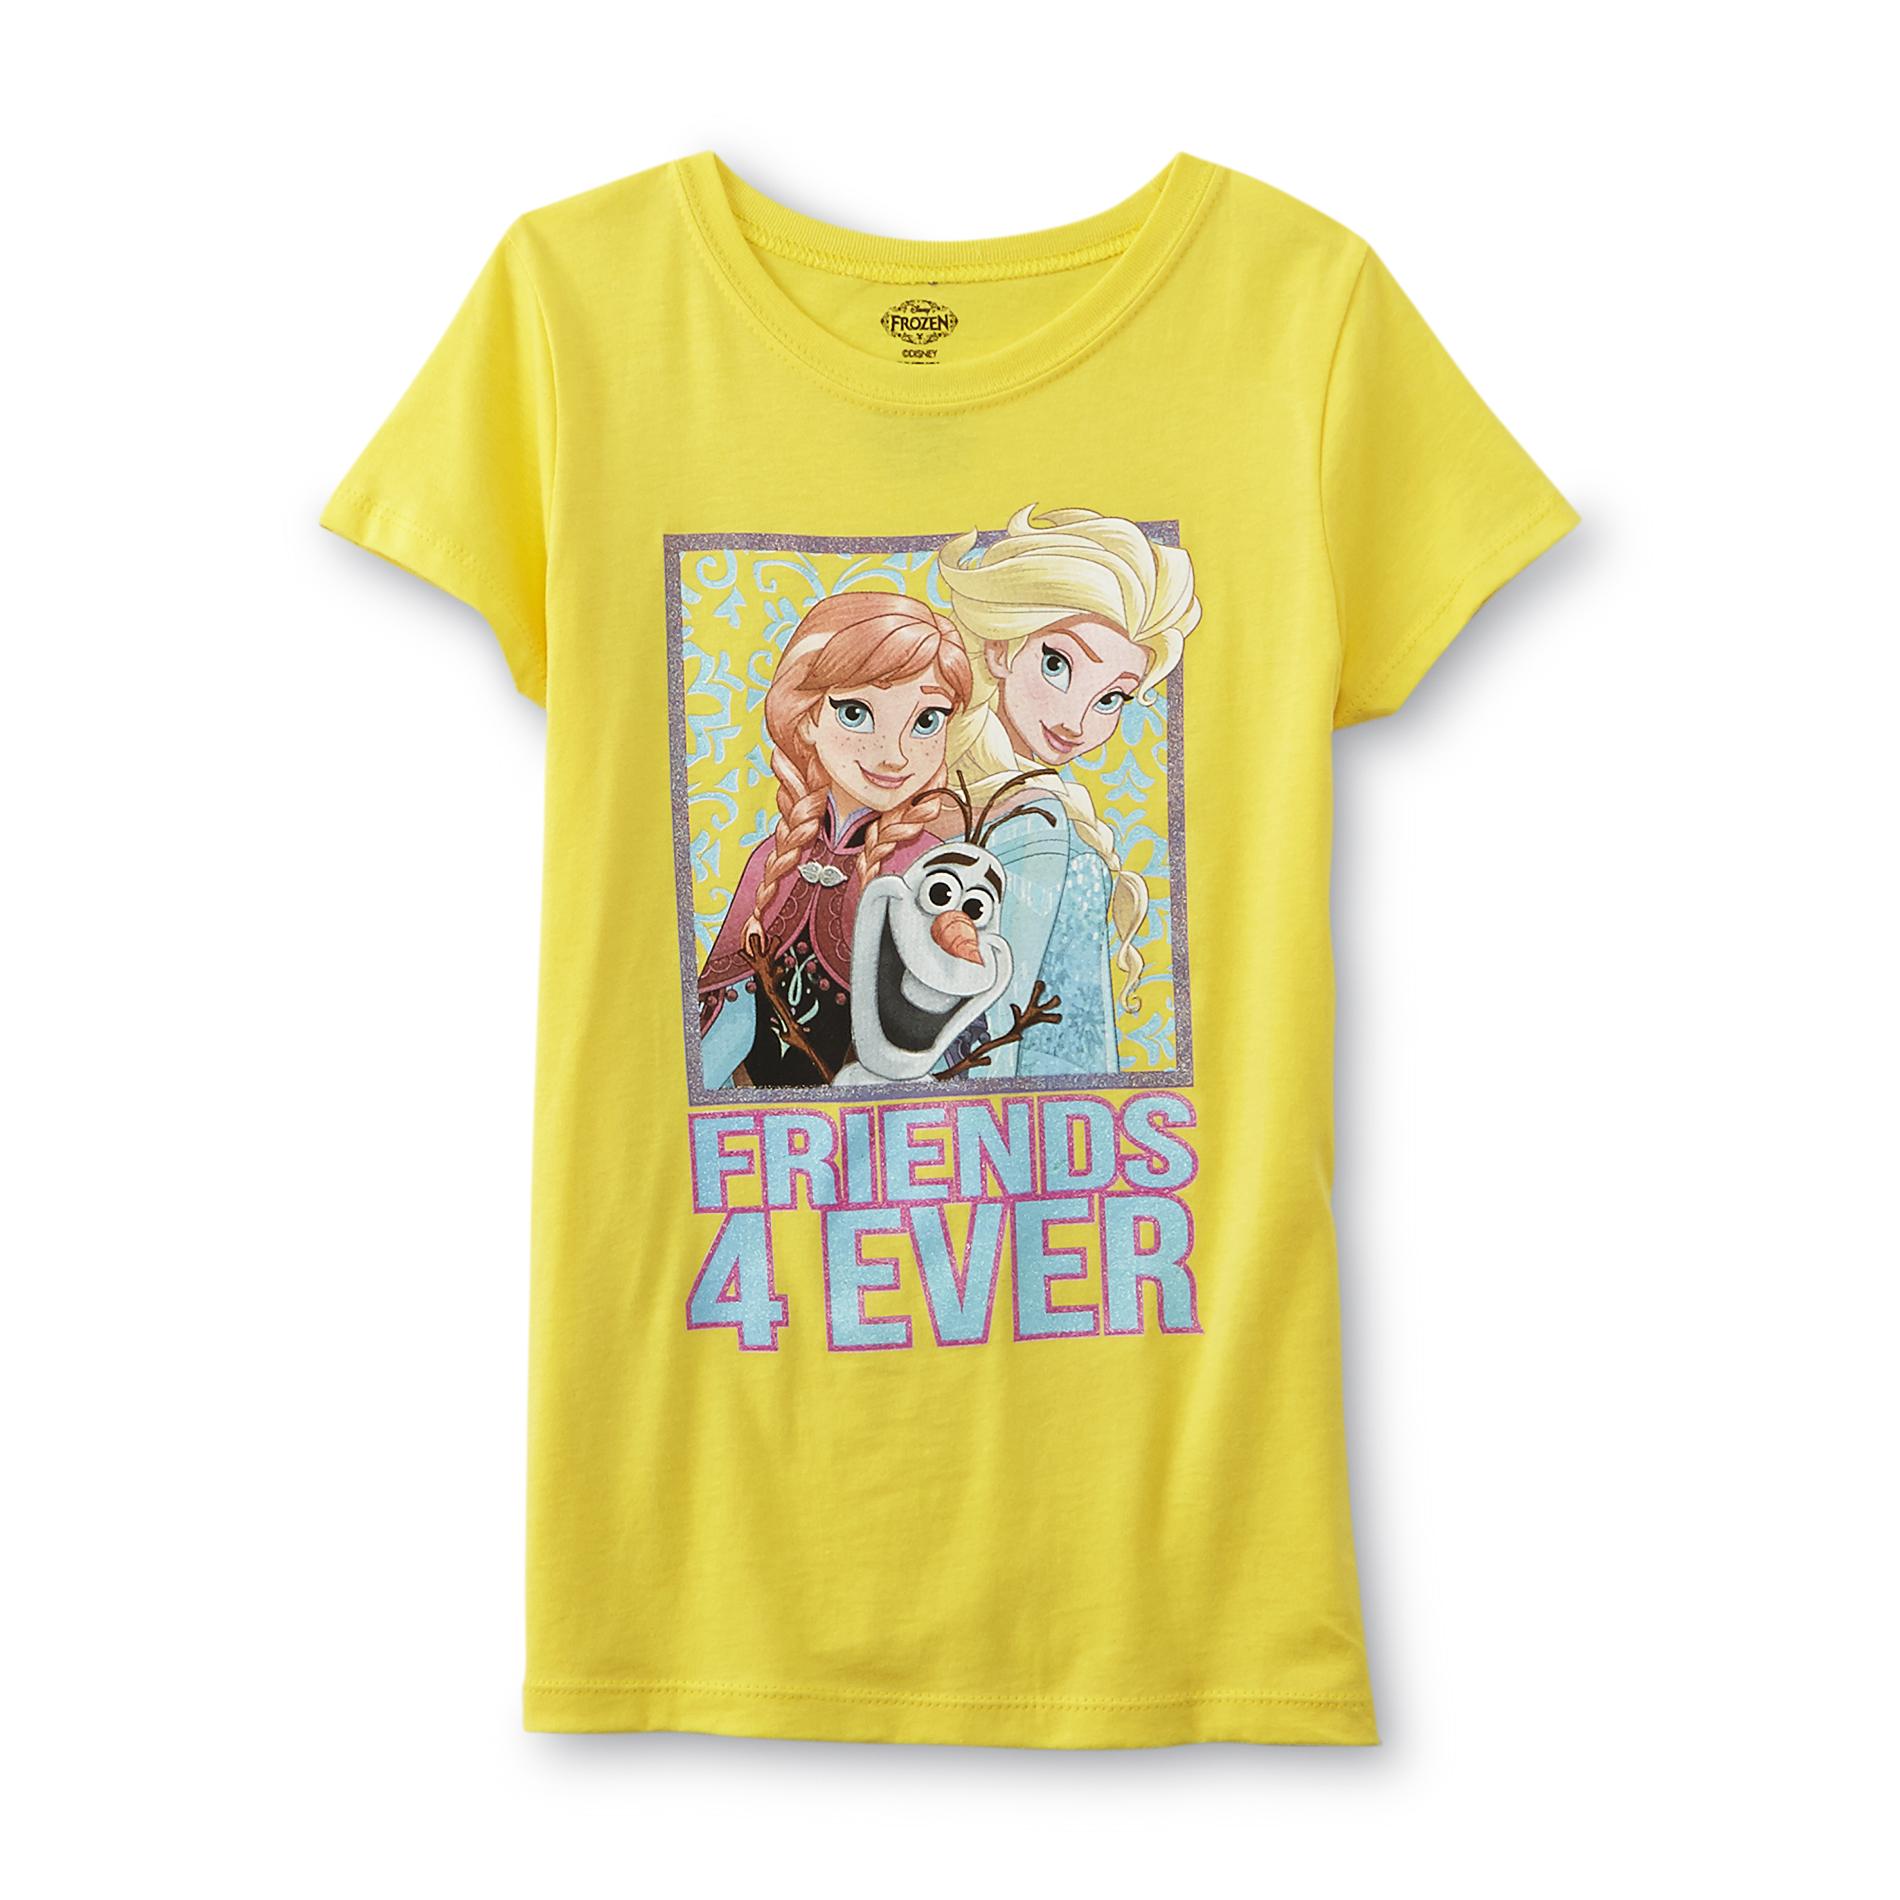 Disney Frozen Girl's Graphic T-Shirt - Friends 4 Ever